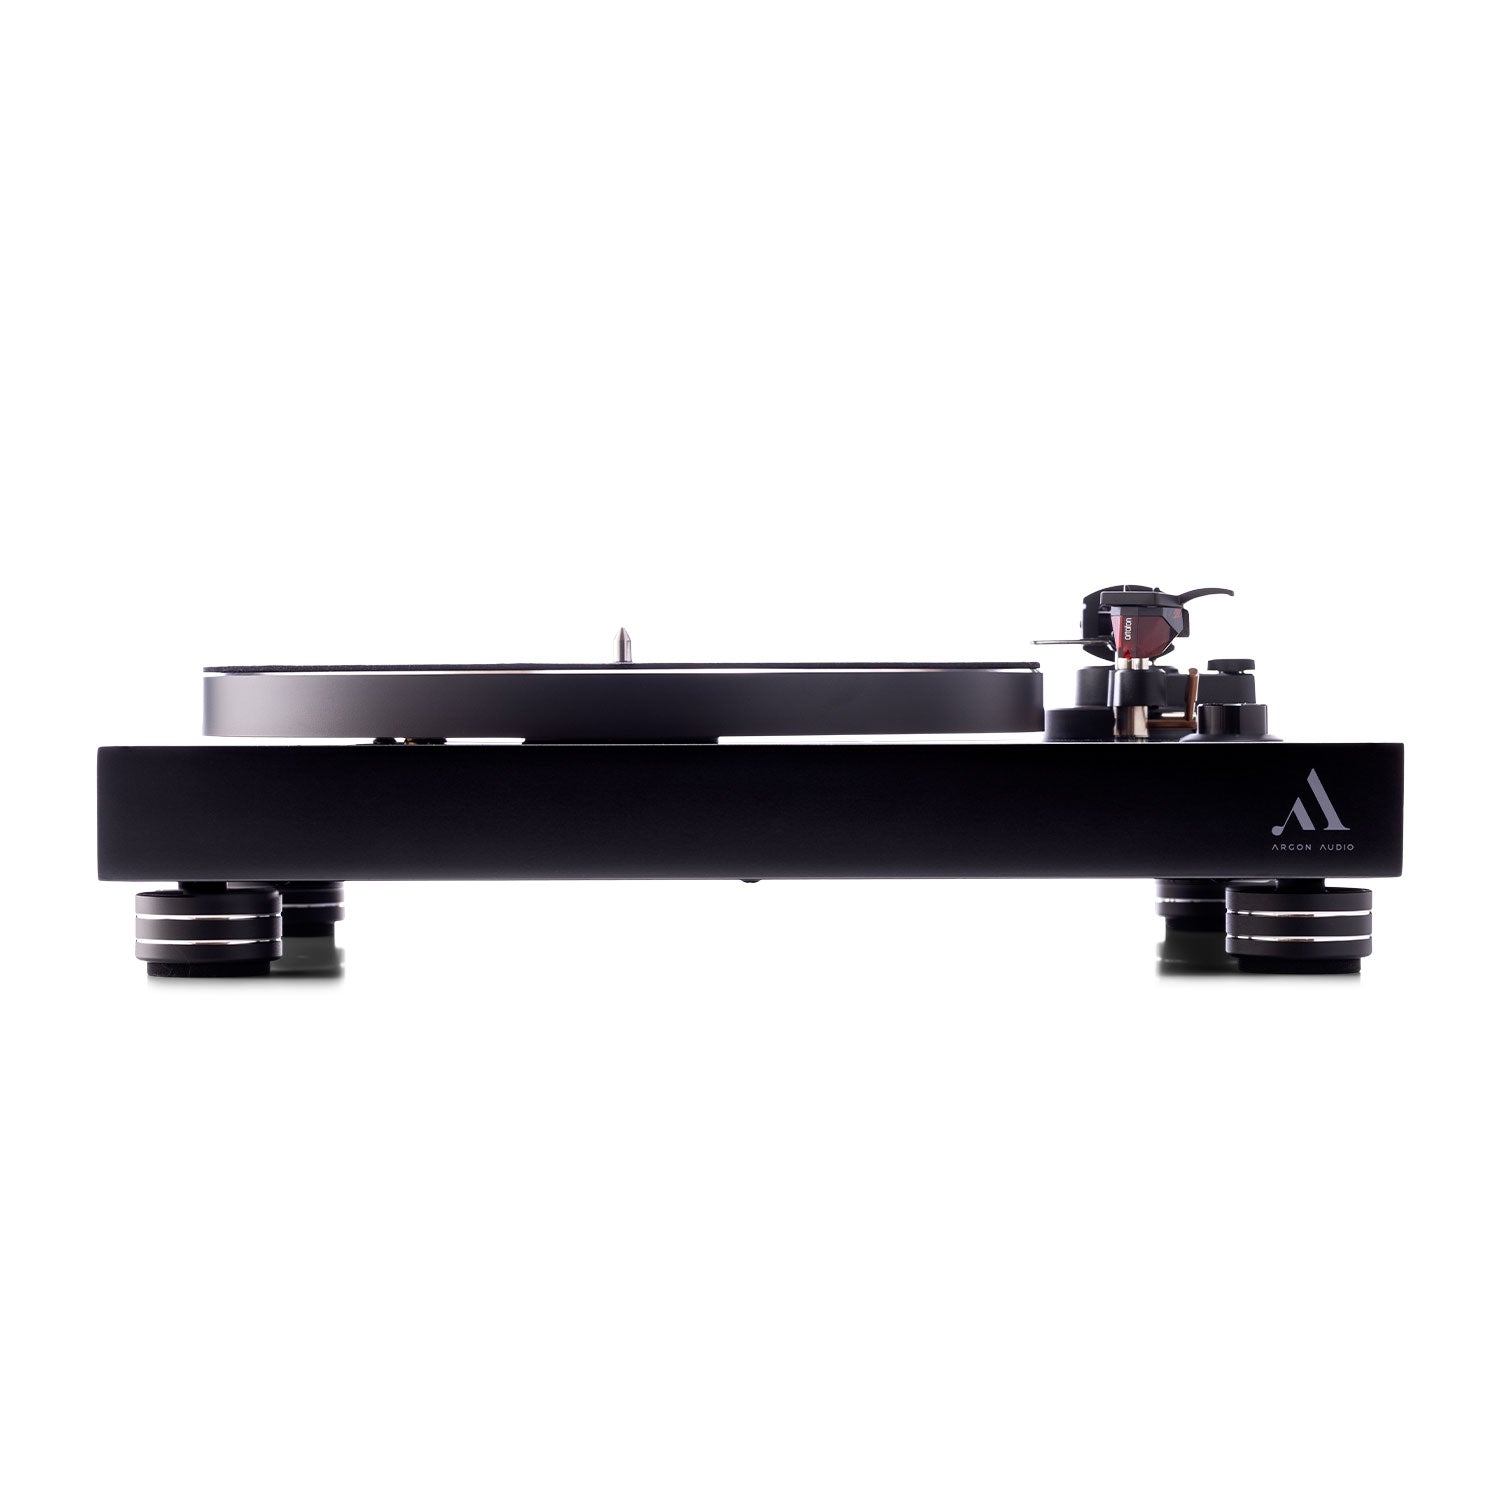 Argon Audio TT-4 Turntable with Built-In Preamp #color_Black Matt Lacquer